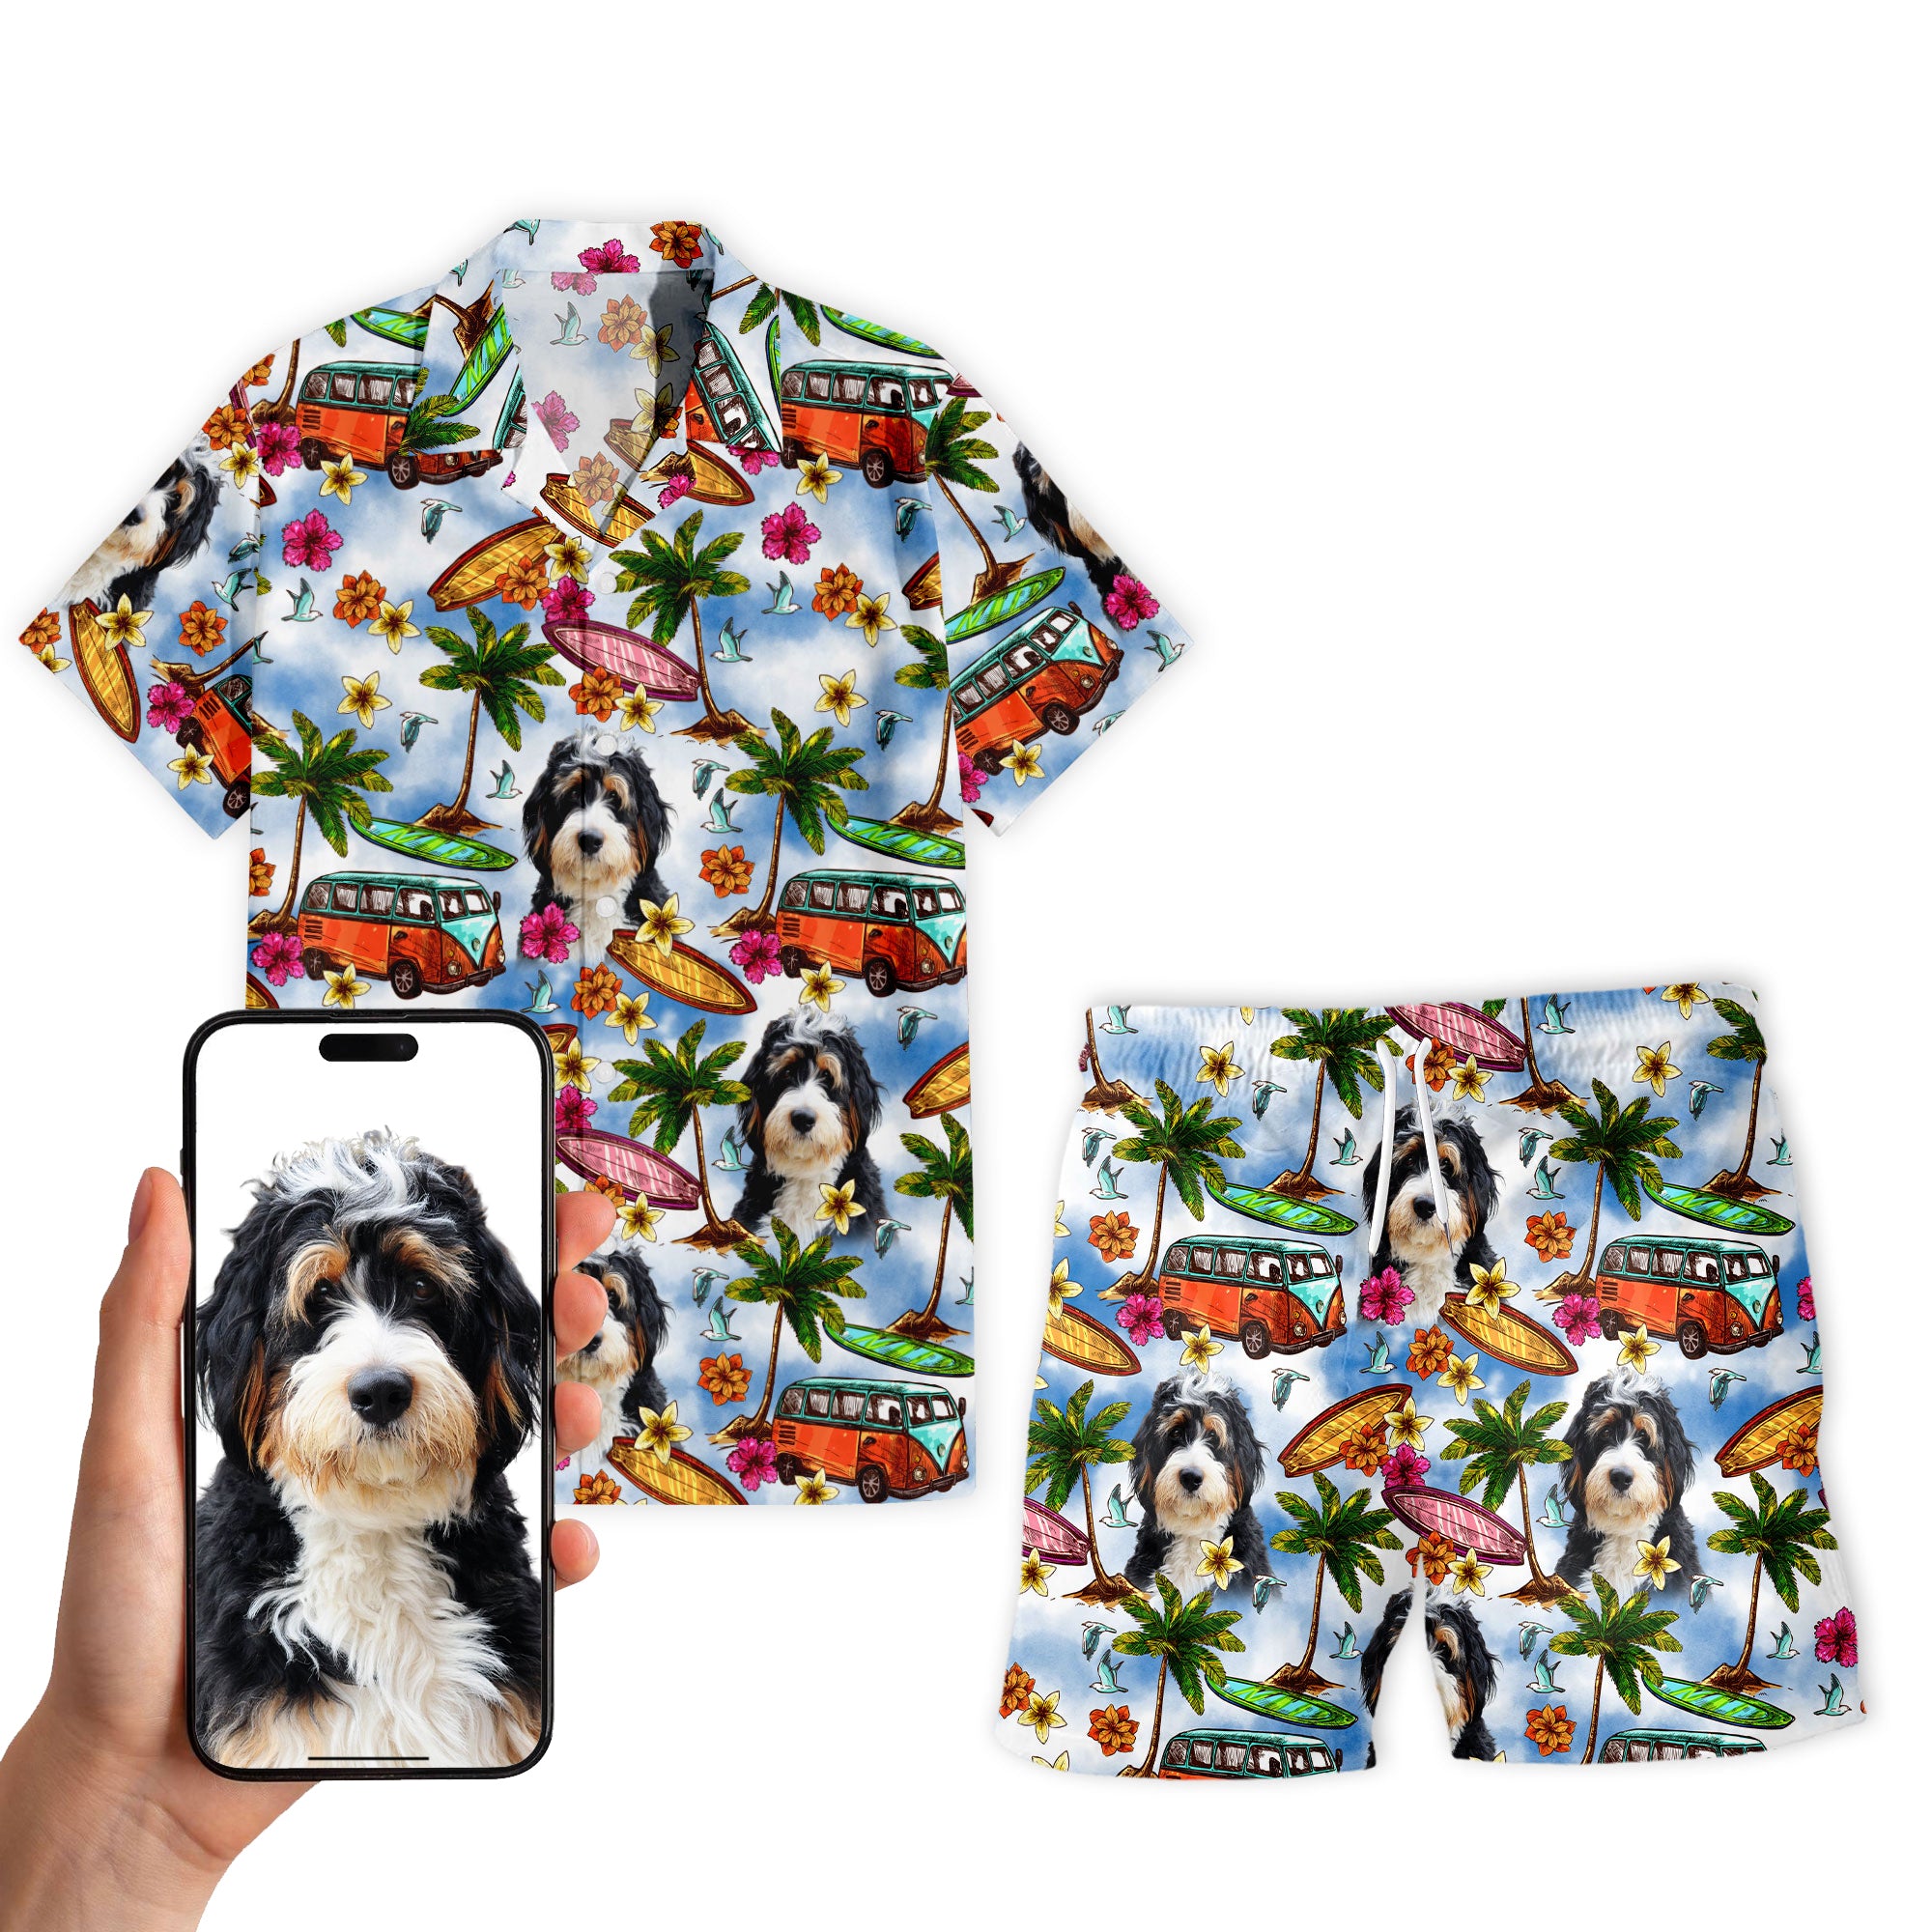 Hawaiian Shirt & Shorts Personalized - 41